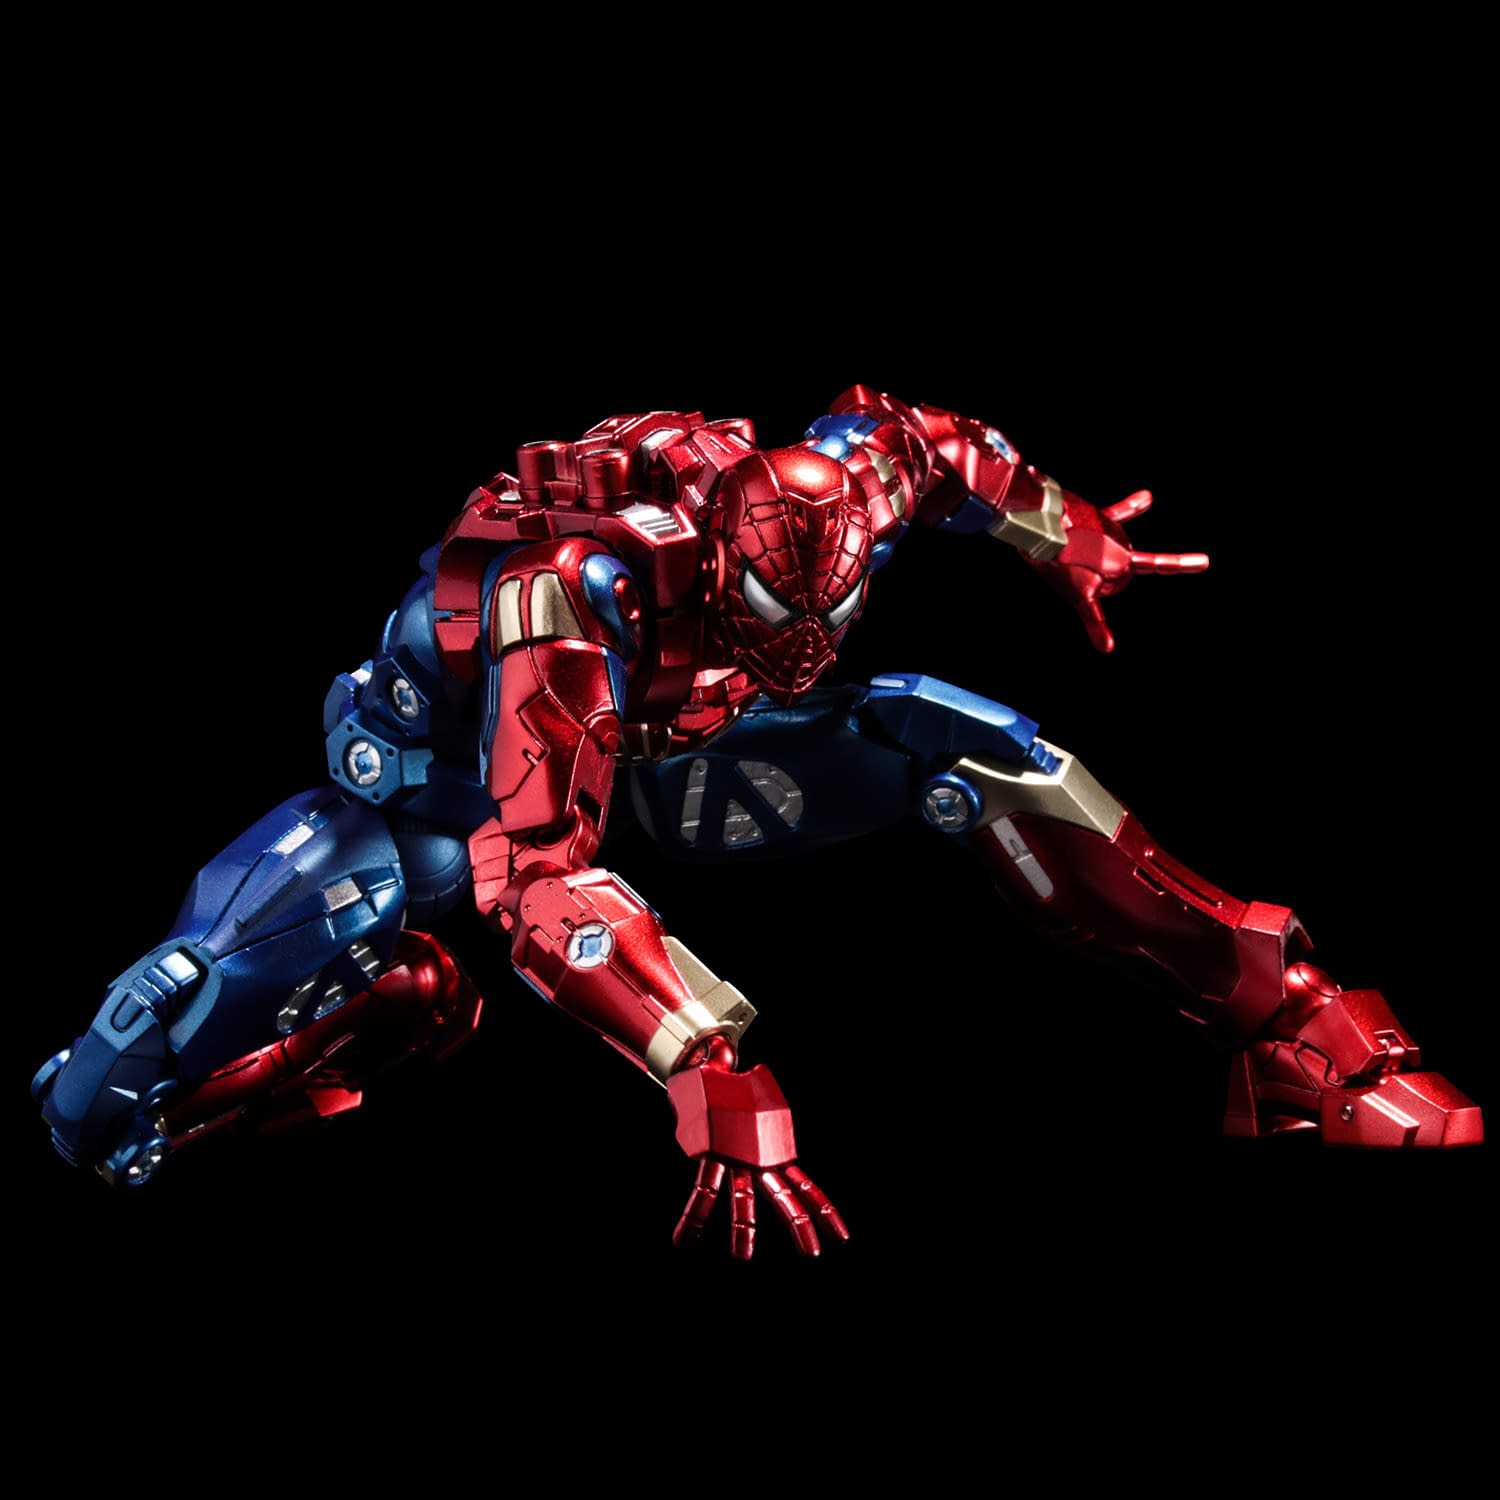 Hasbro Figurine Spidey Iron Man Clair